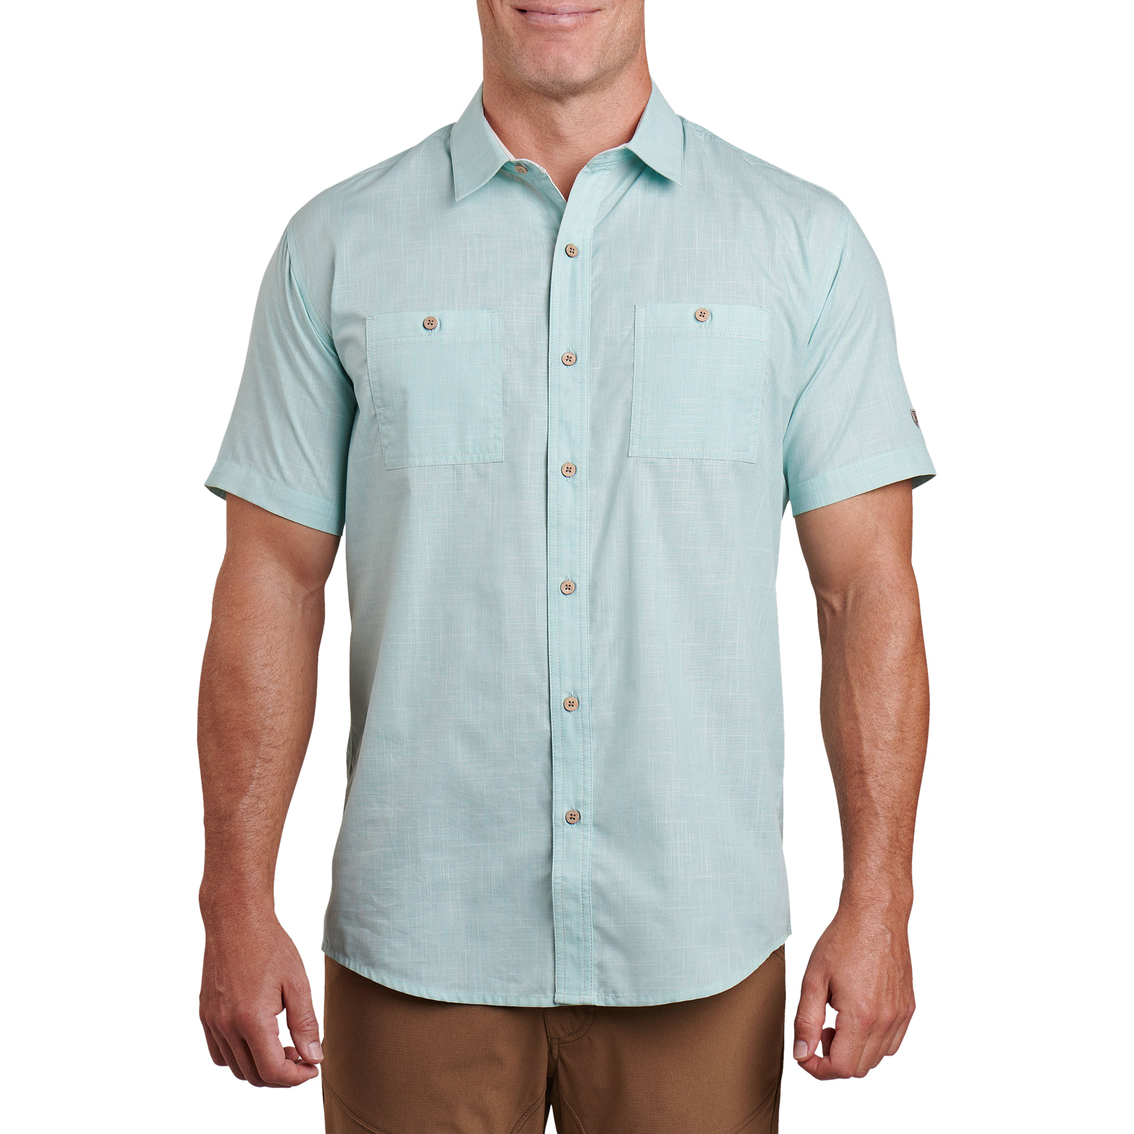 Kuhl Karib Lightweight Shirt | Shirts | Clothing & Accessories | Shop ...